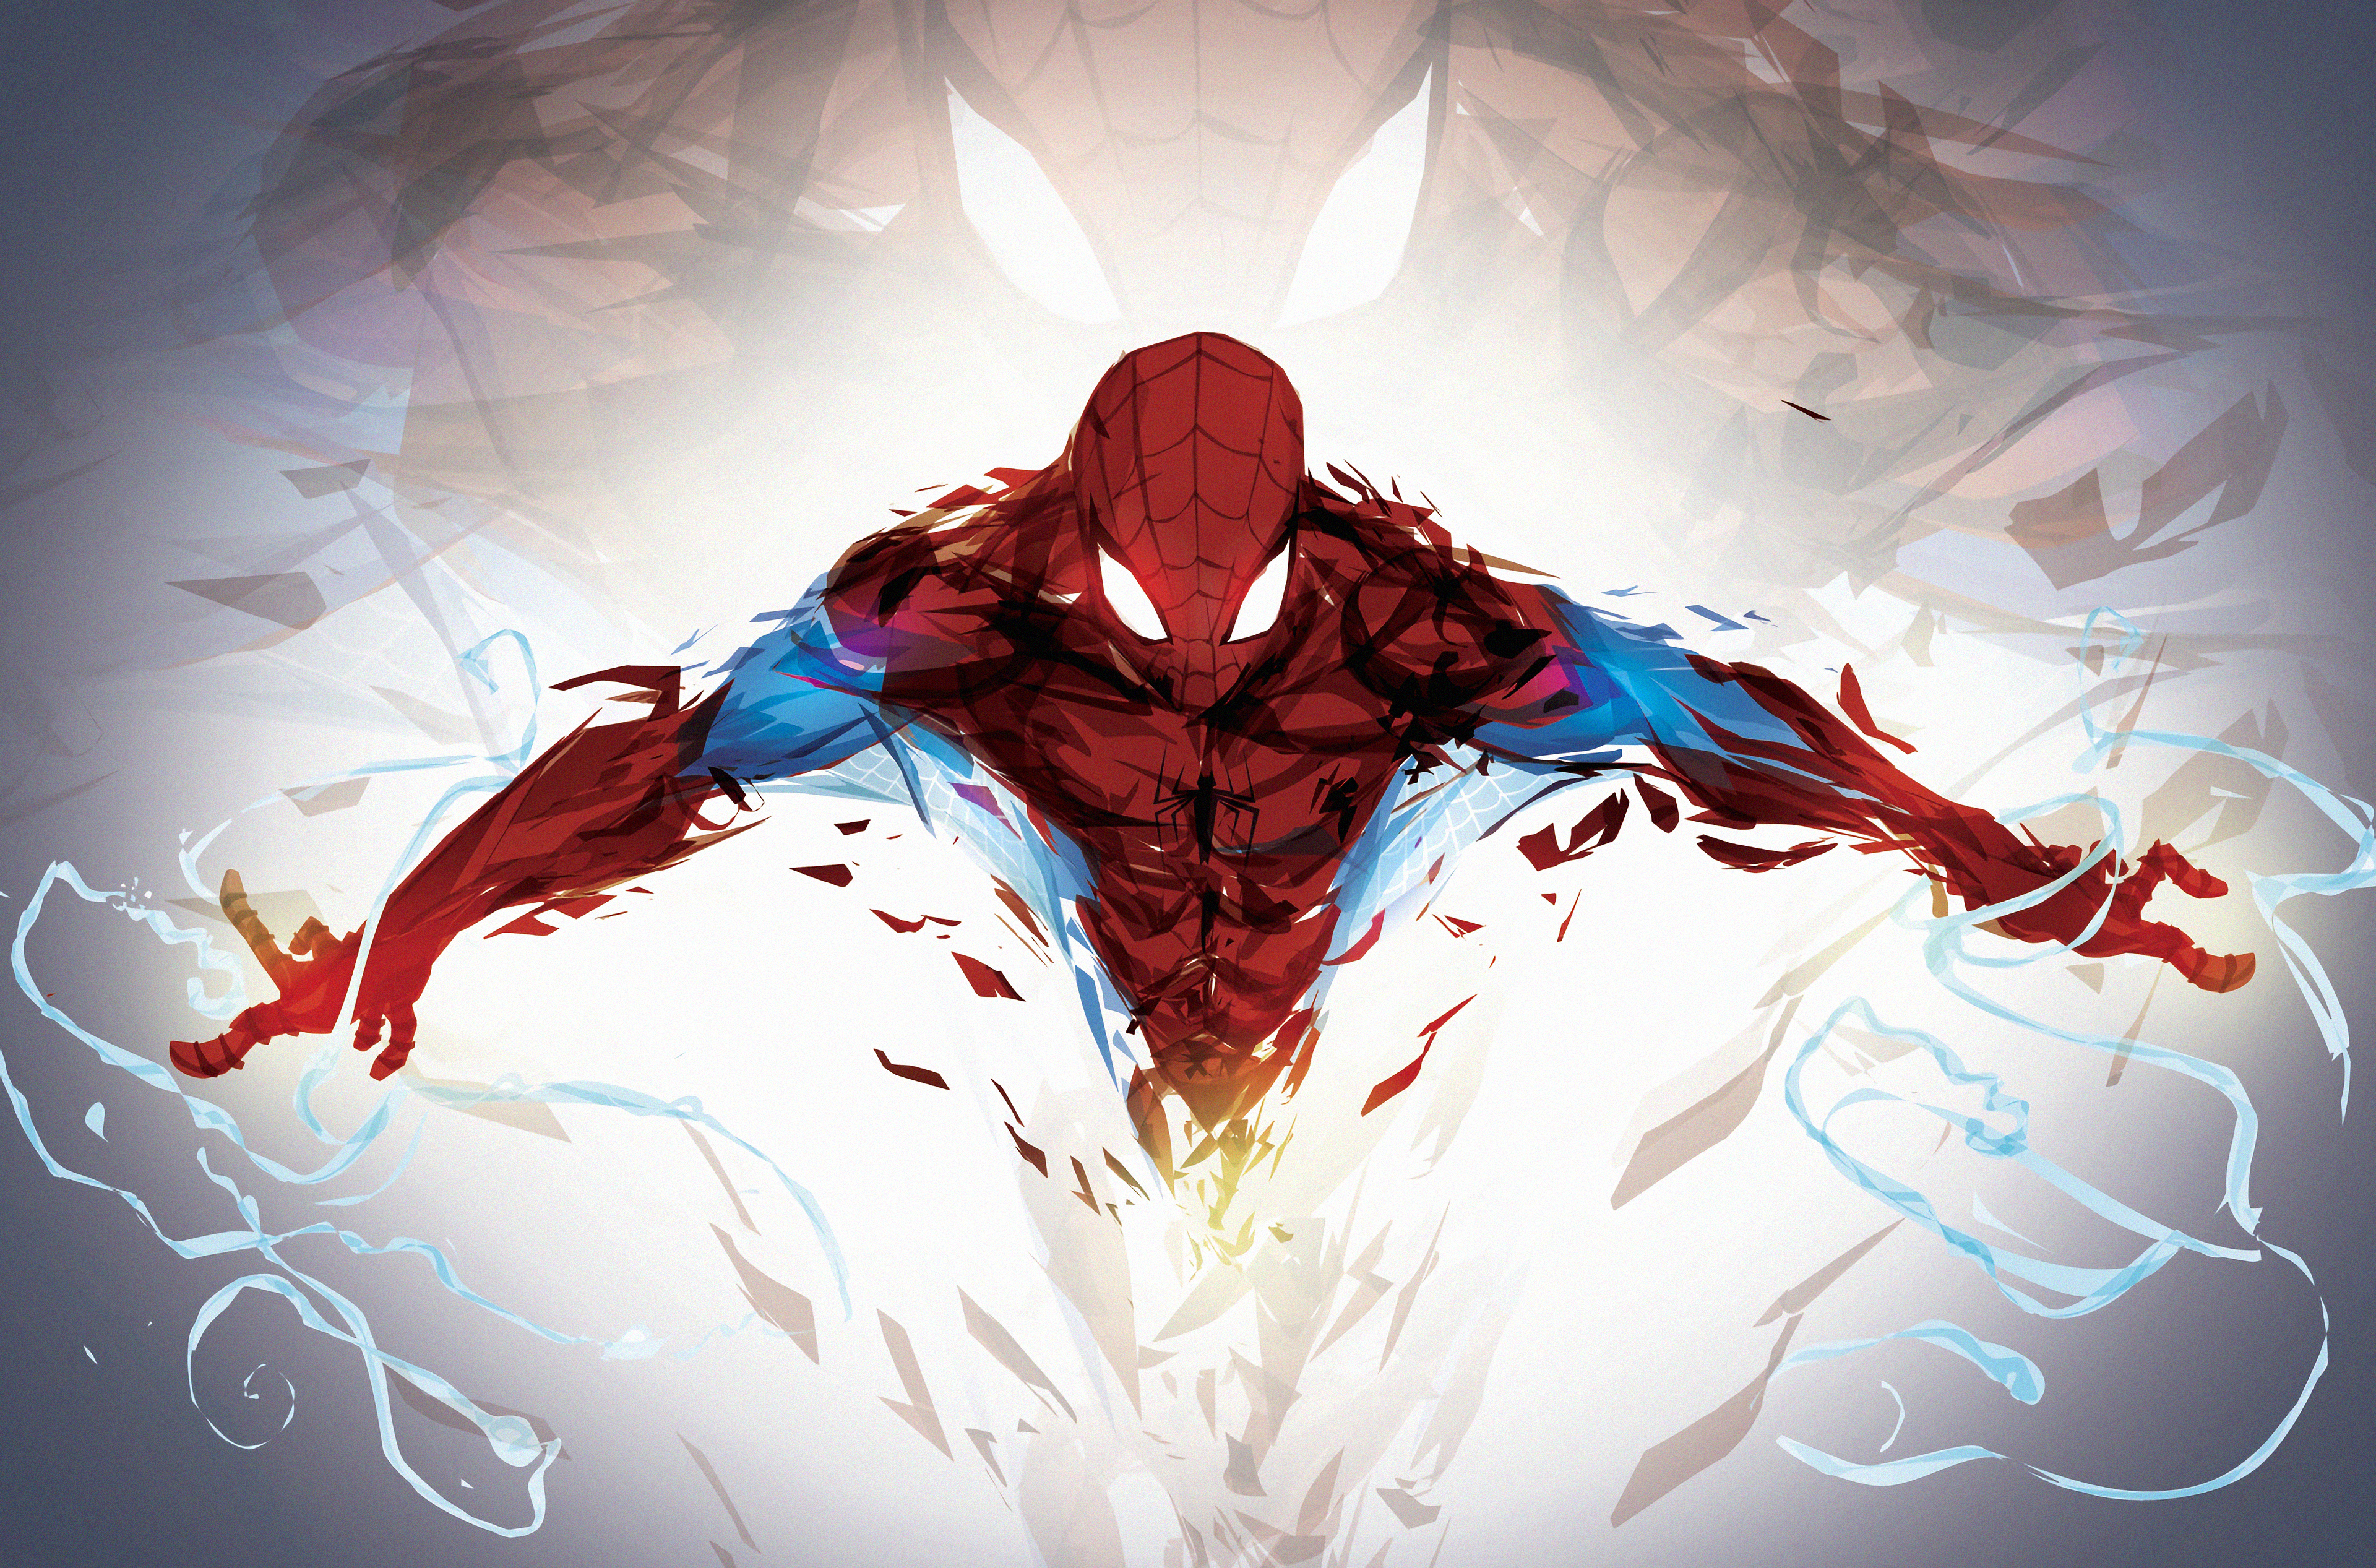 Spider-Man 4k Ultra HD Wallpaper by chasingartwork